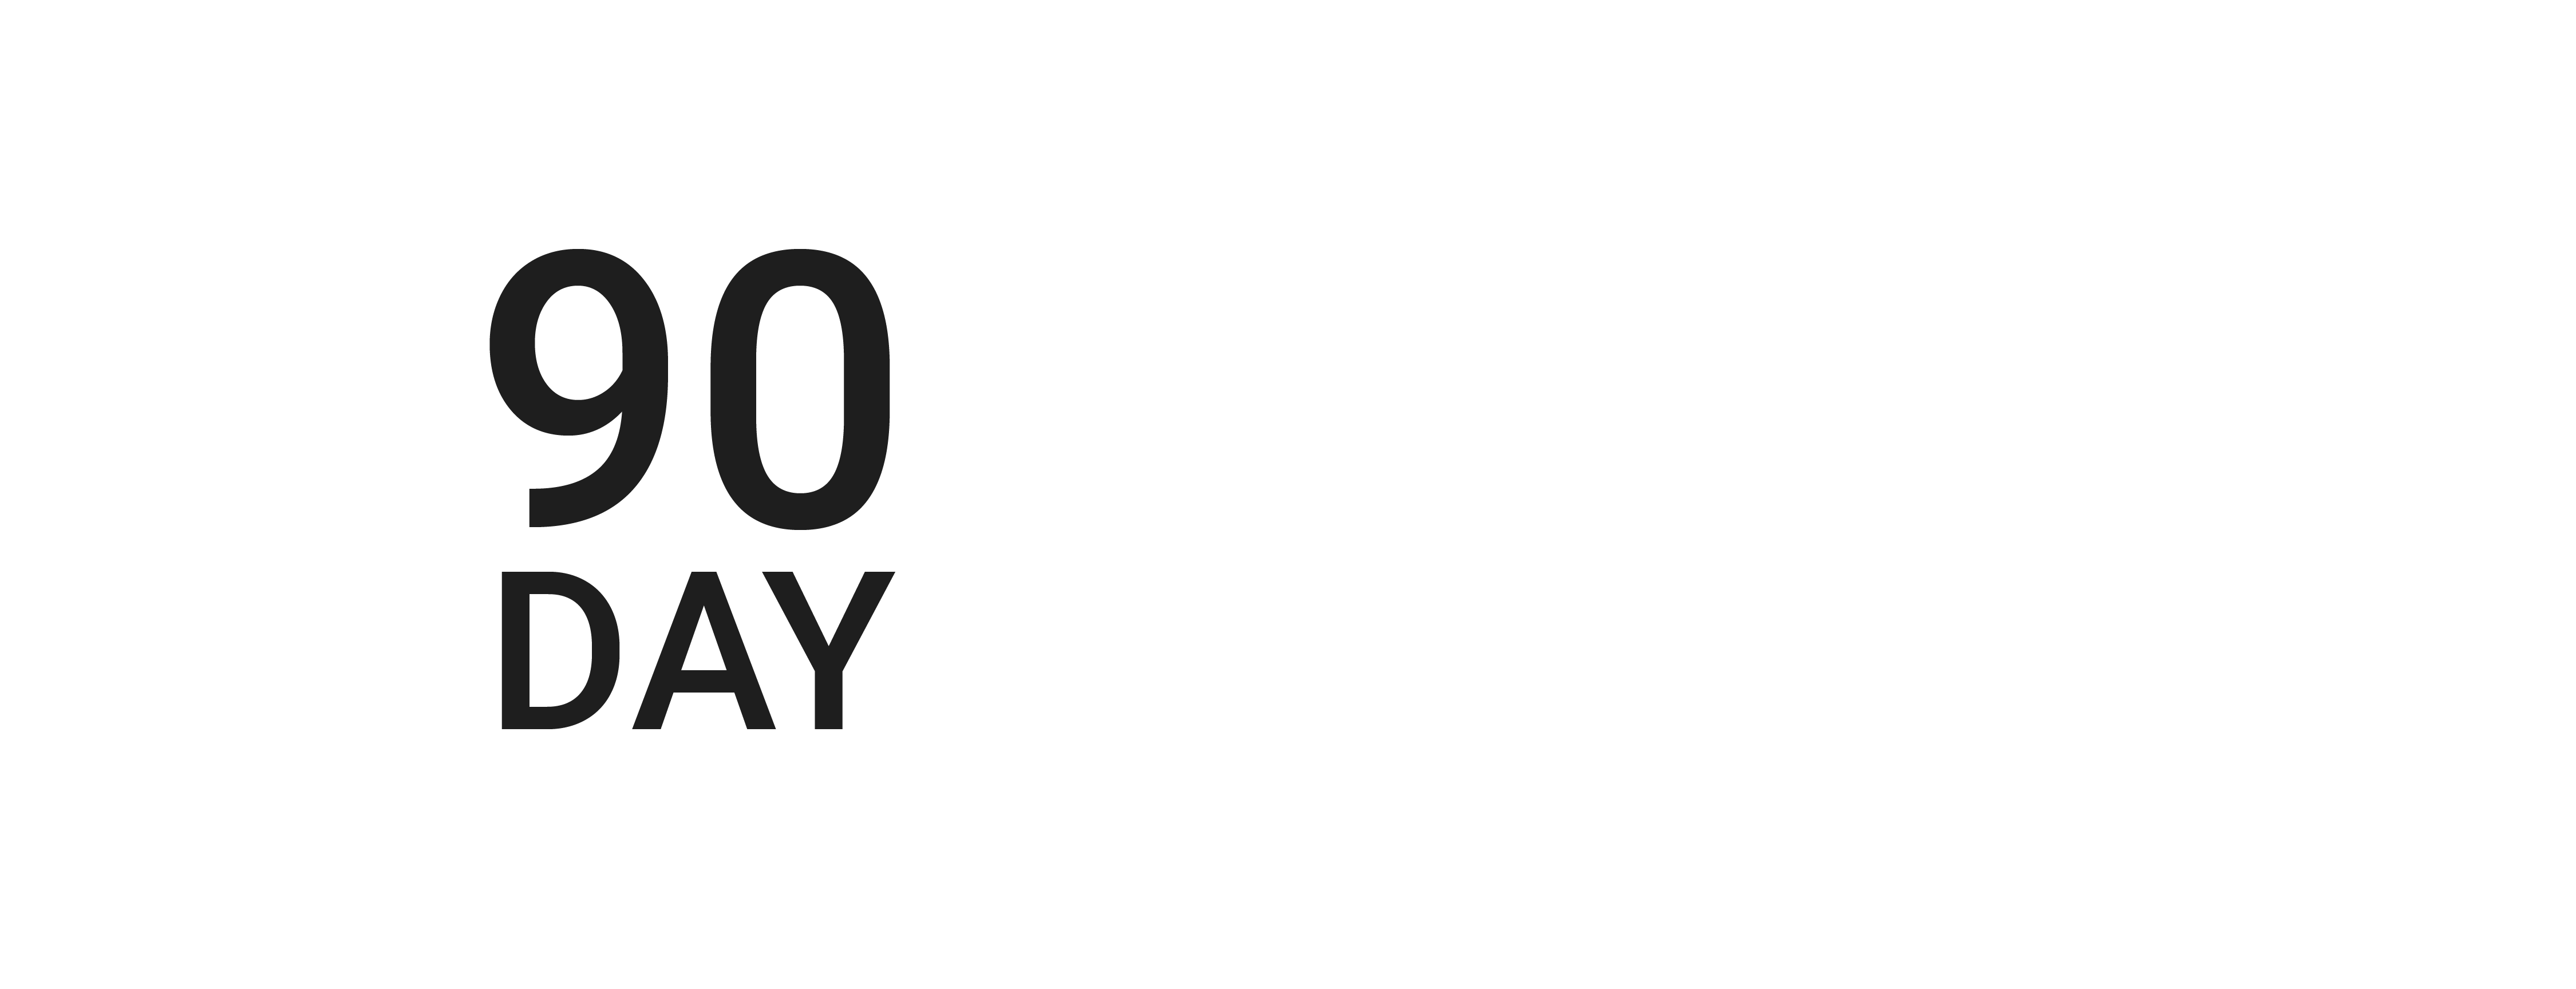 90 day insole guarantee